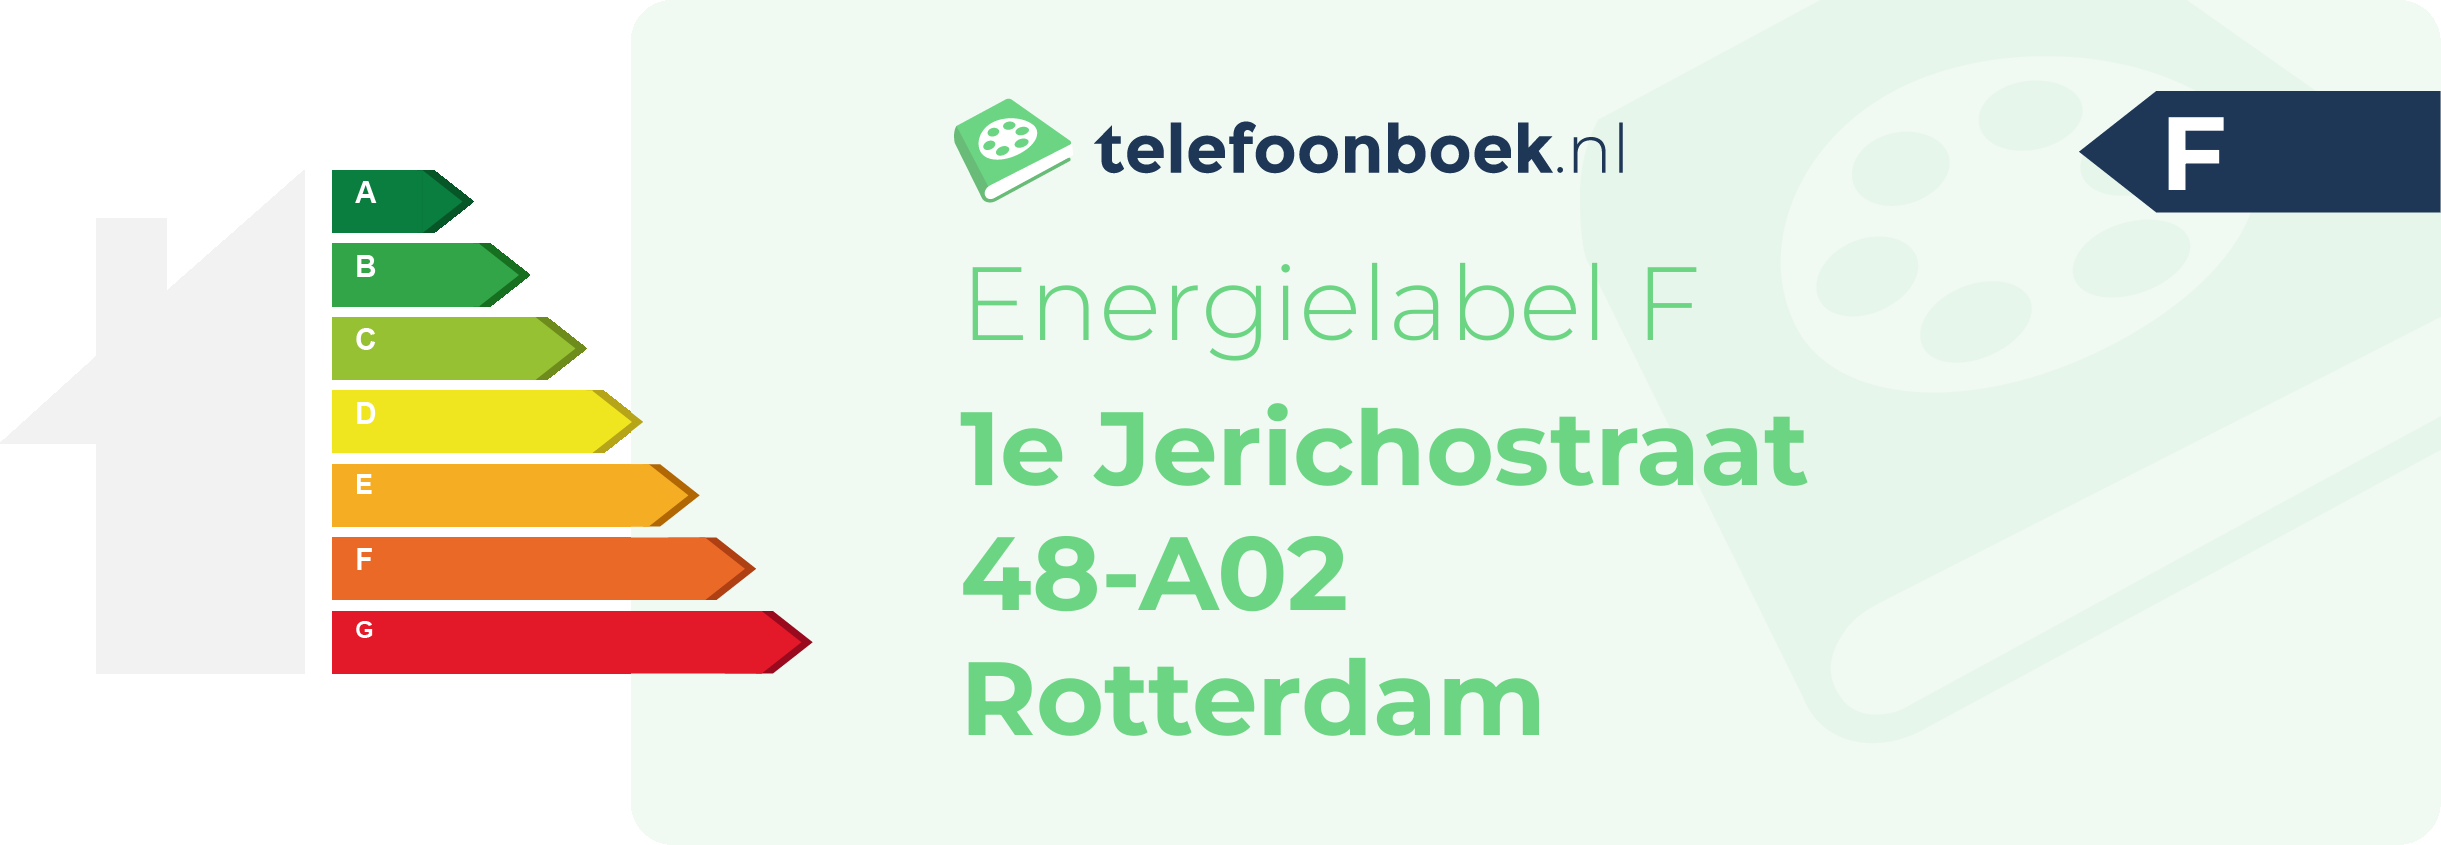 Energielabel 1e Jerichostraat 48-A02 Rotterdam